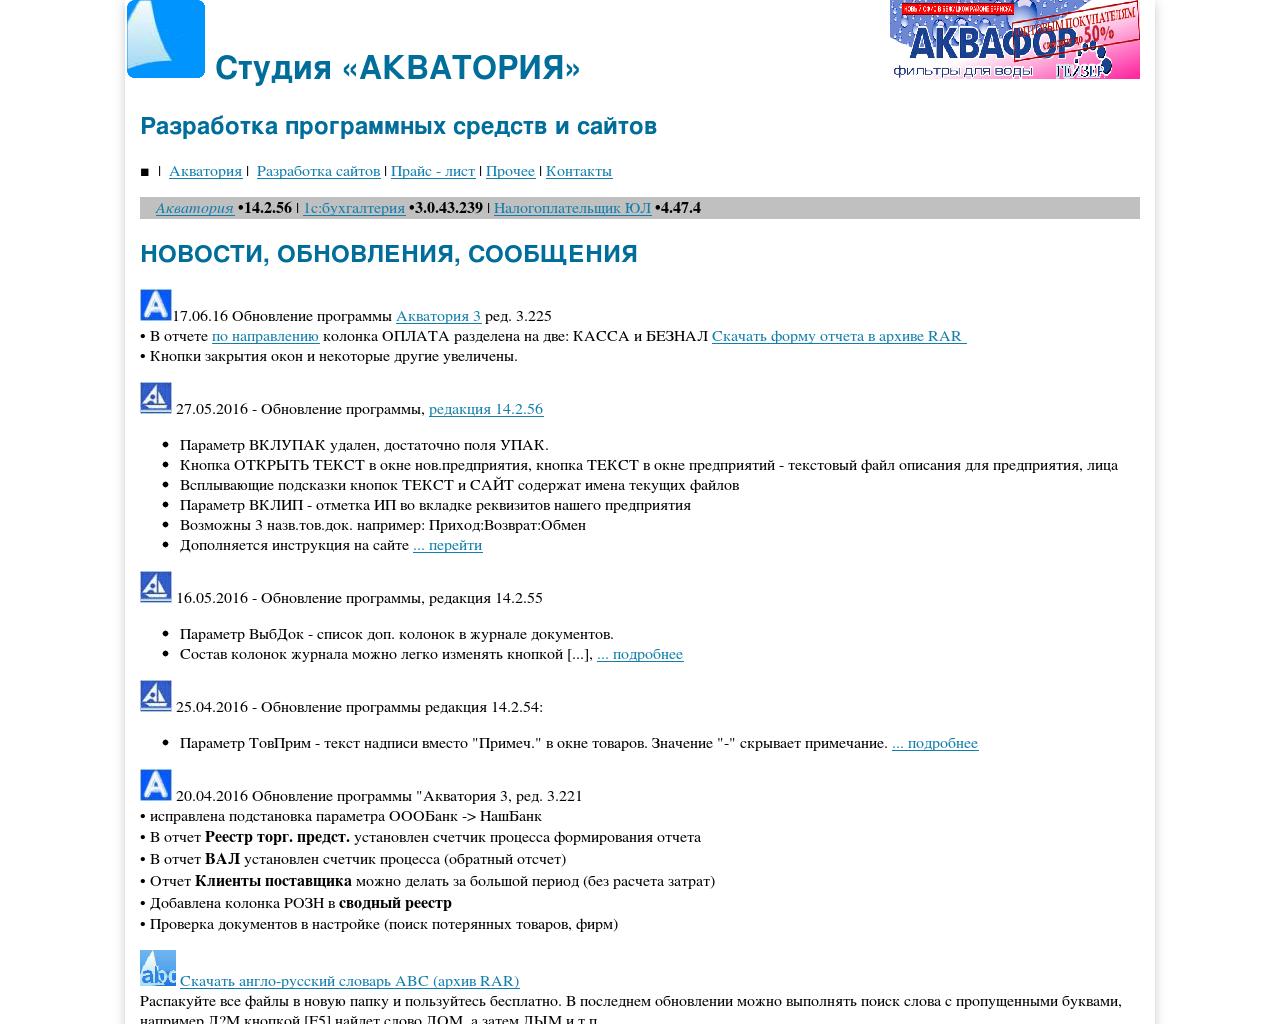 Изображение сайта a-start.ru в разрешении 1280x1024